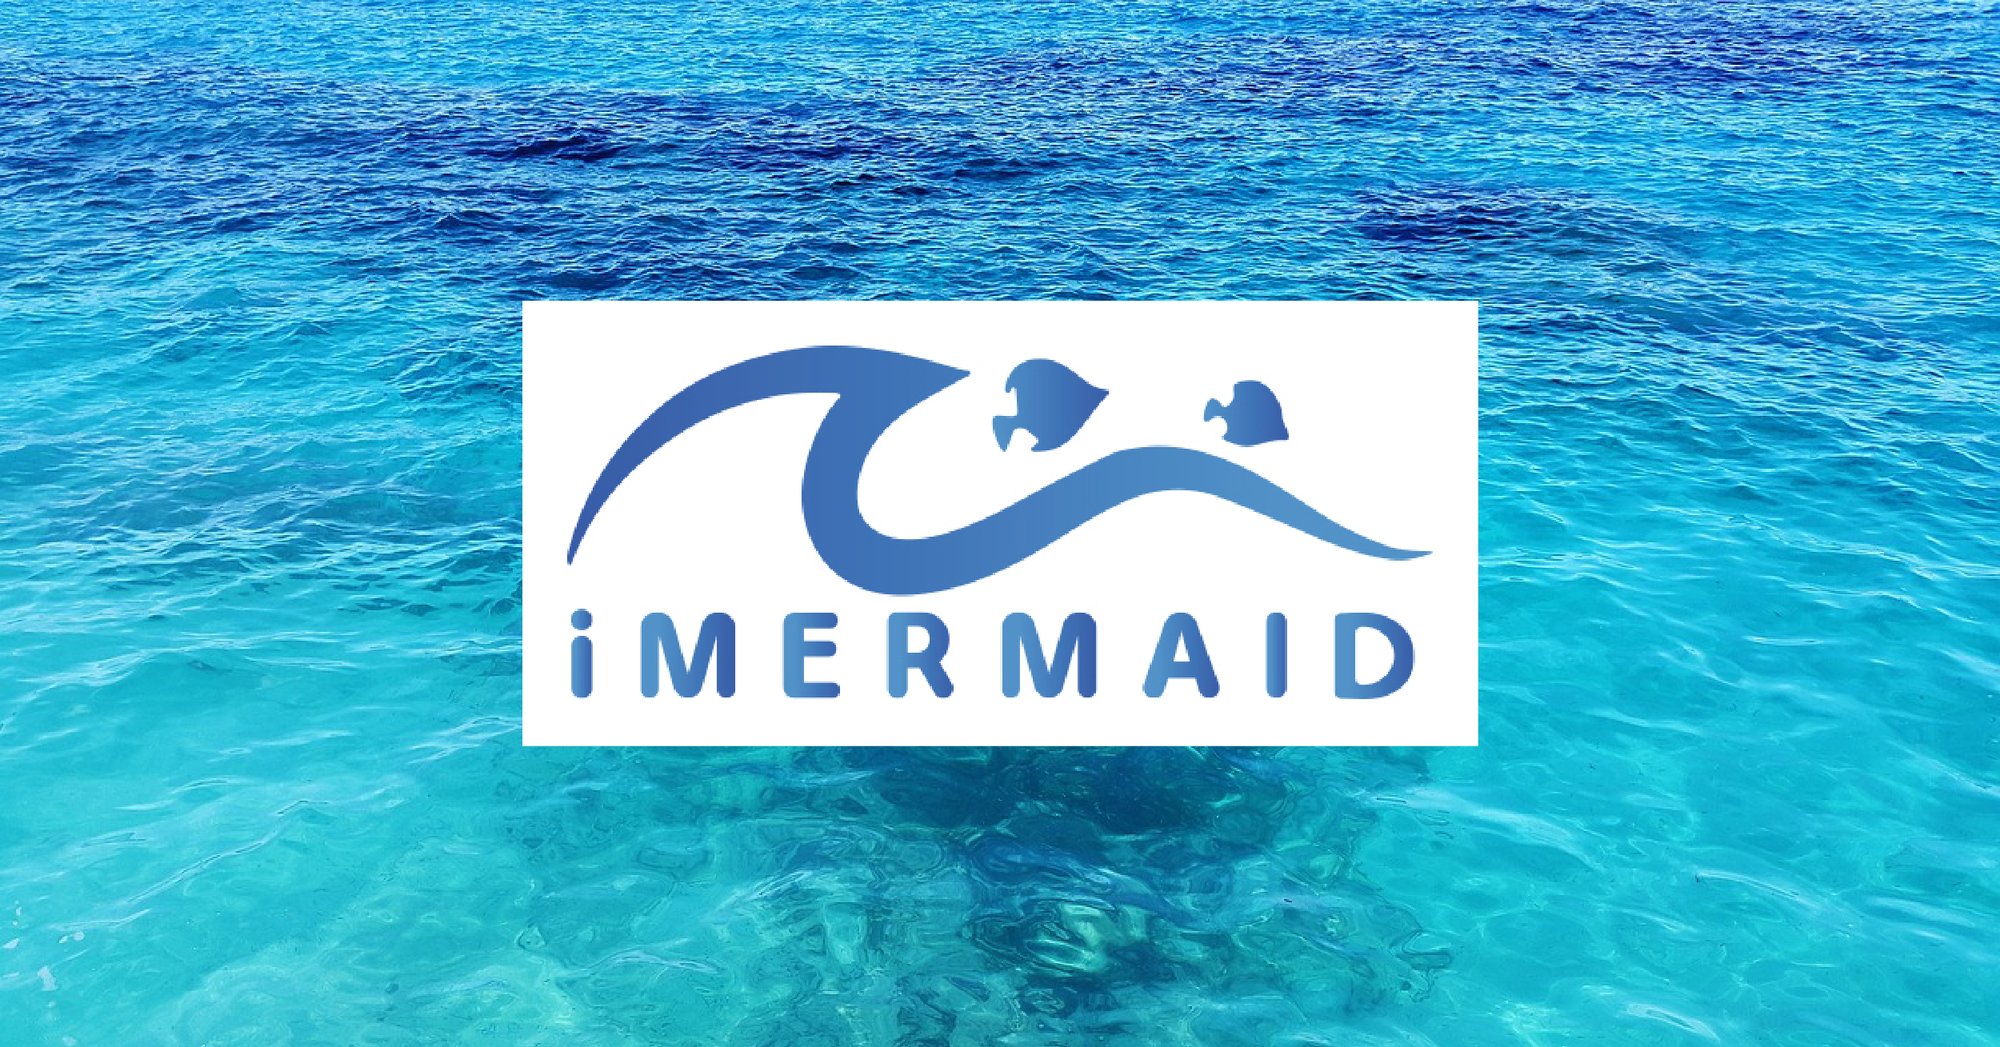 iMermaid project logo